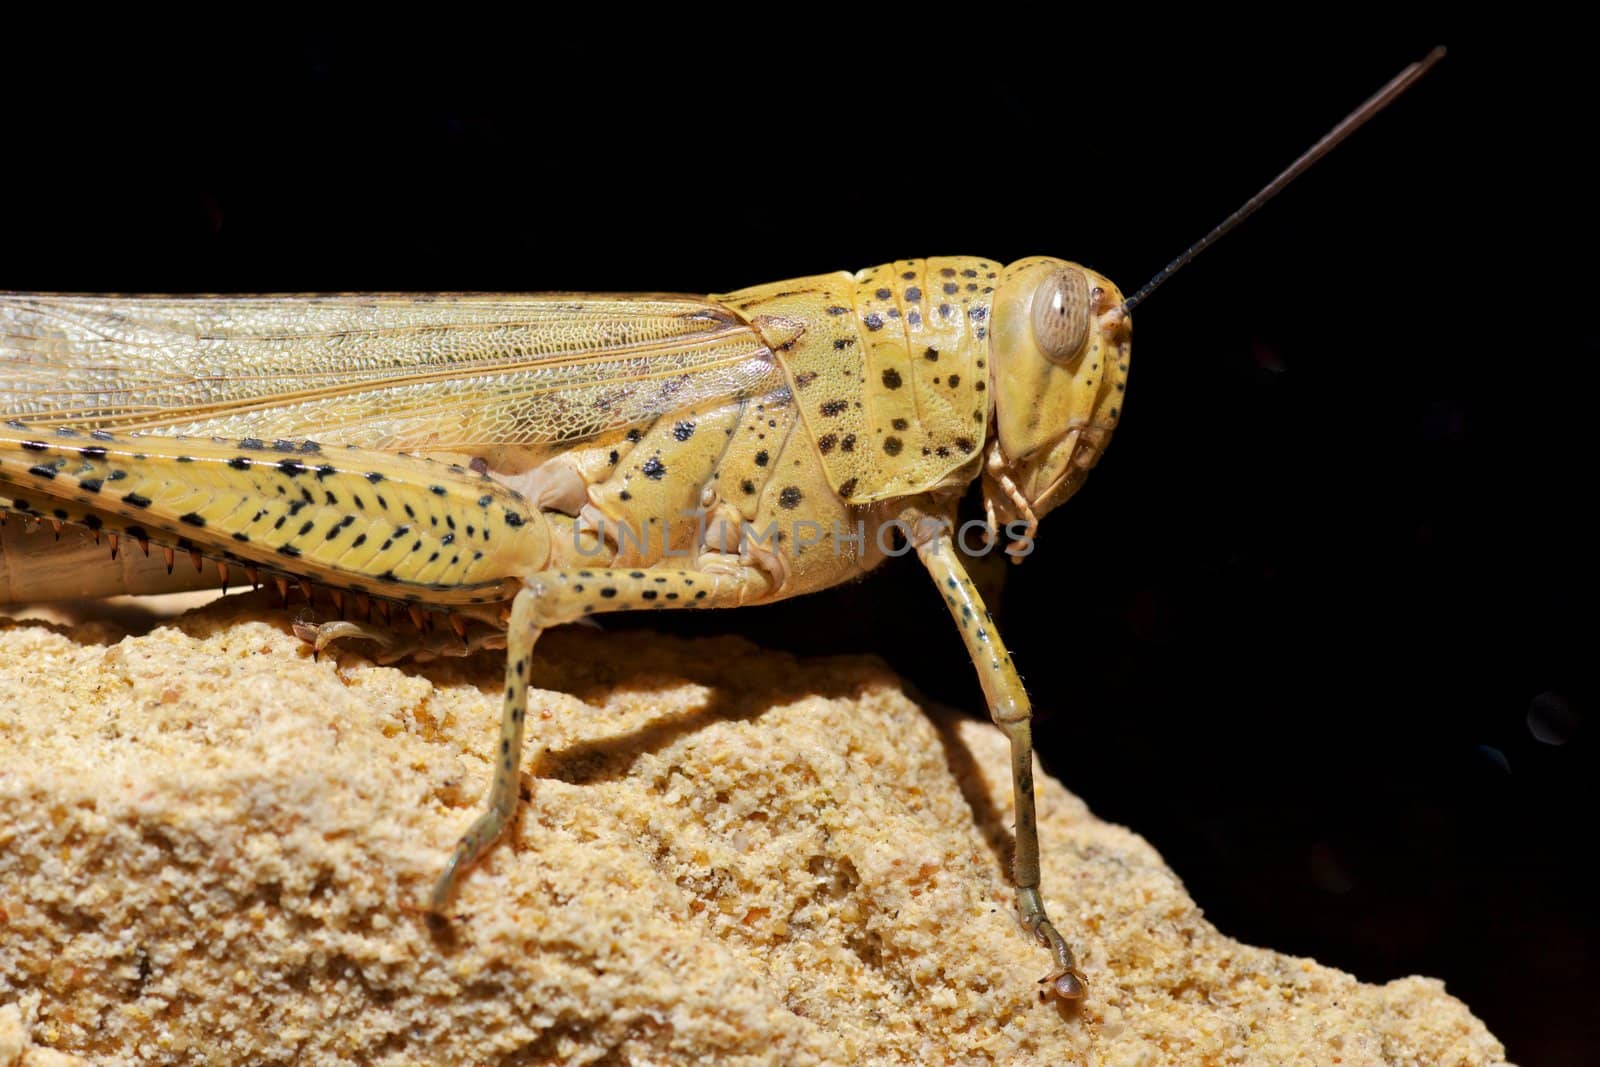 A locust resting on a sandstone rock, Western Australia.